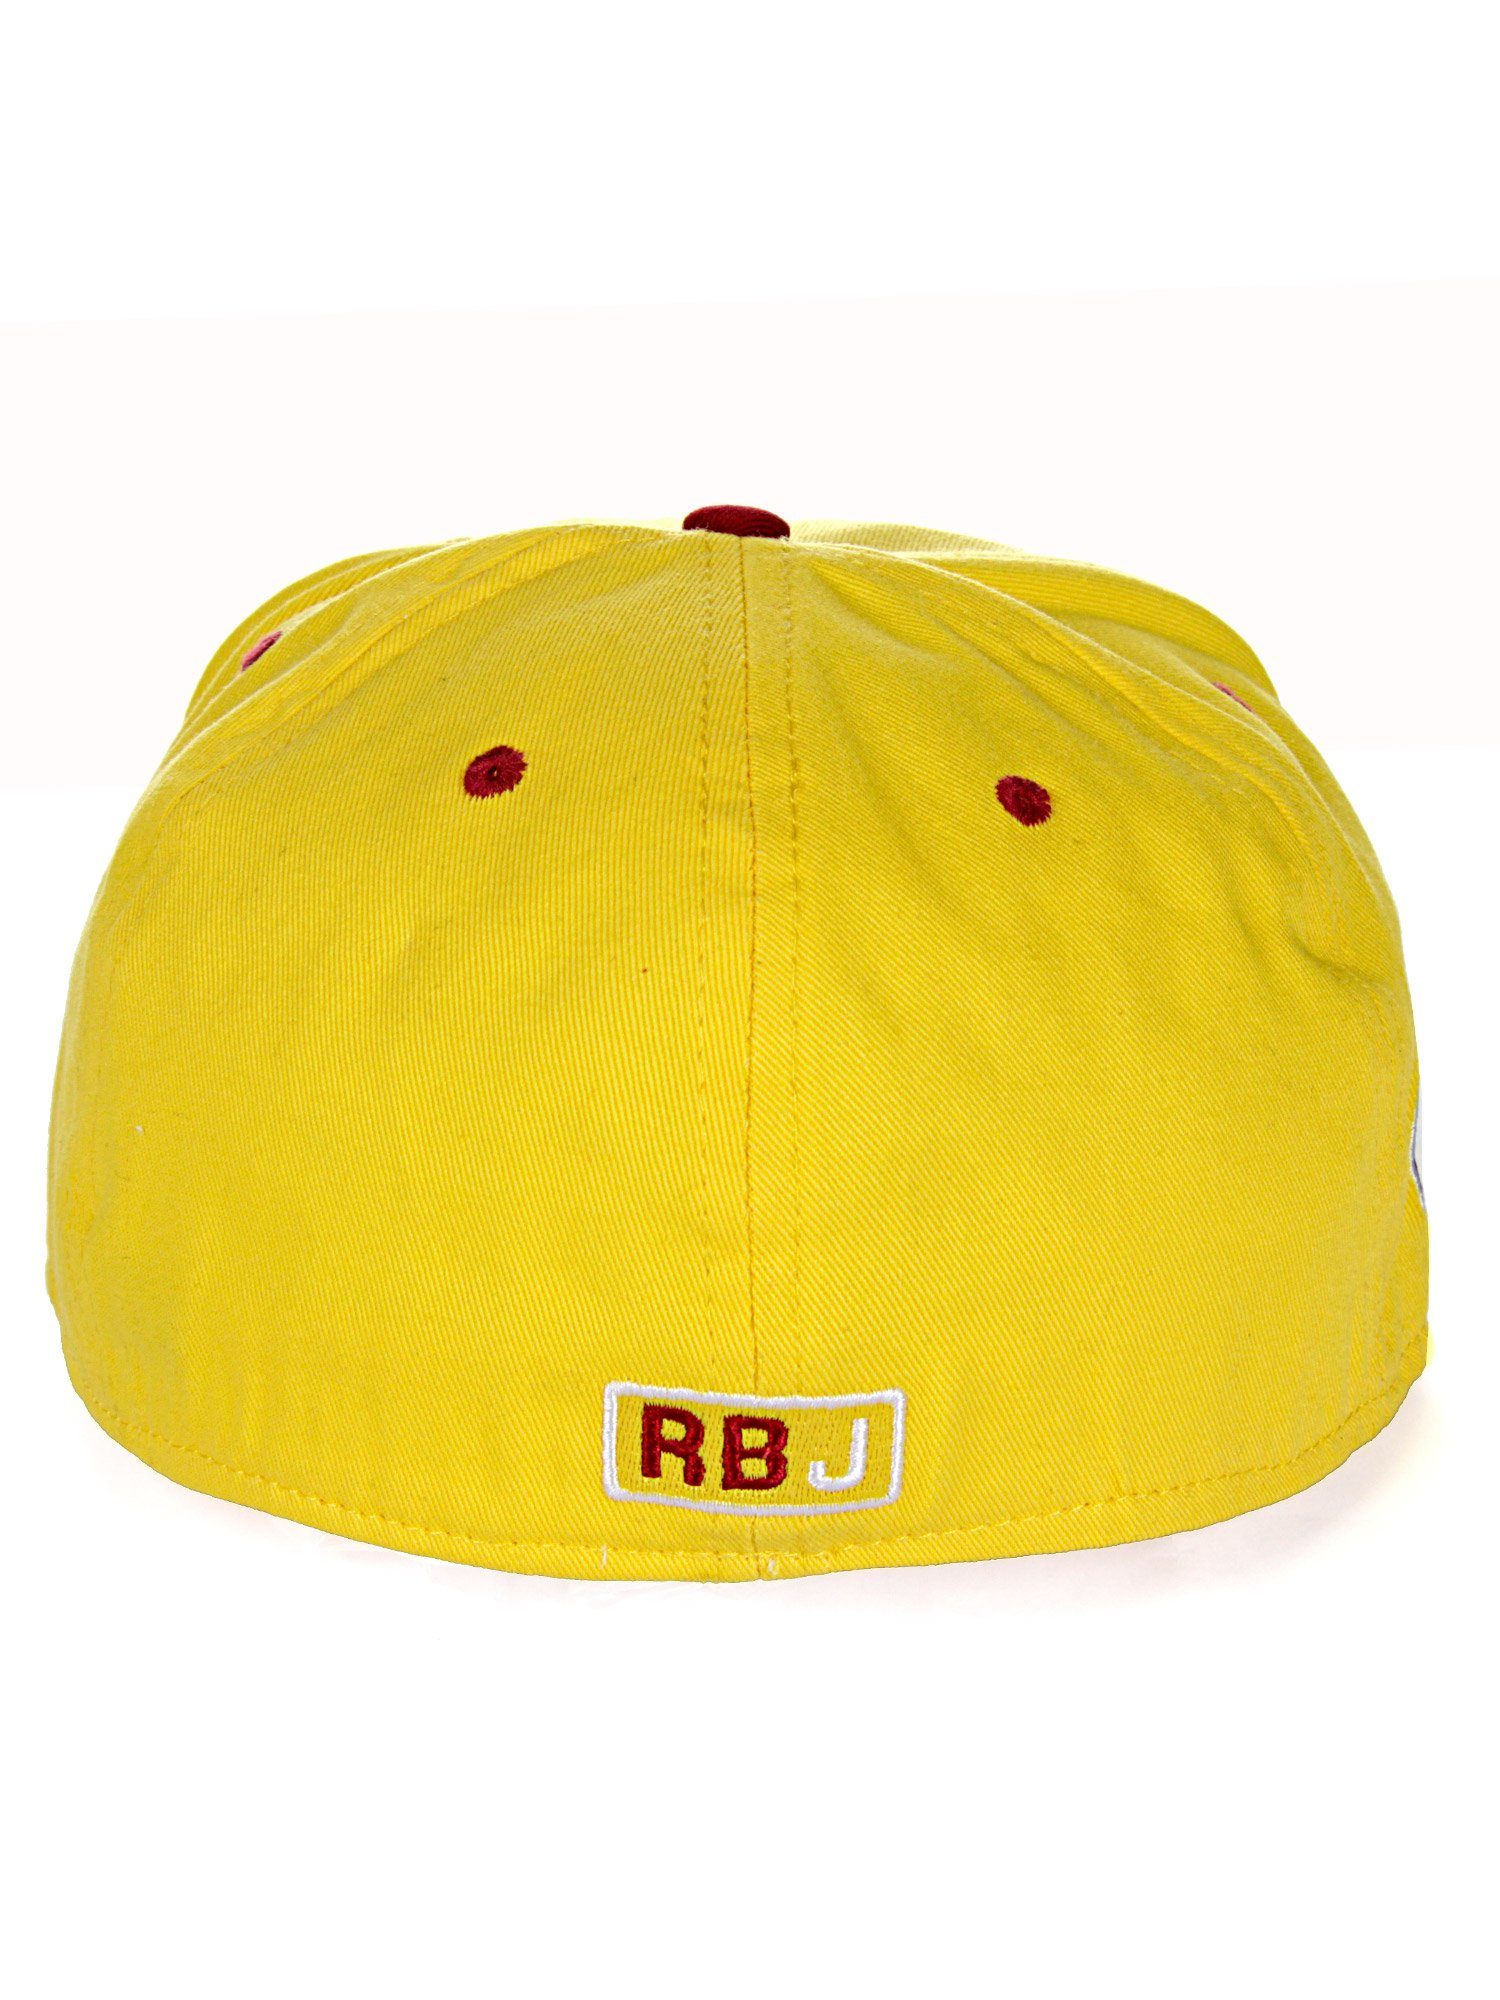 gelb-rot Schirm Durham mit Baseball RedBridge Cap kontrastfarbigem